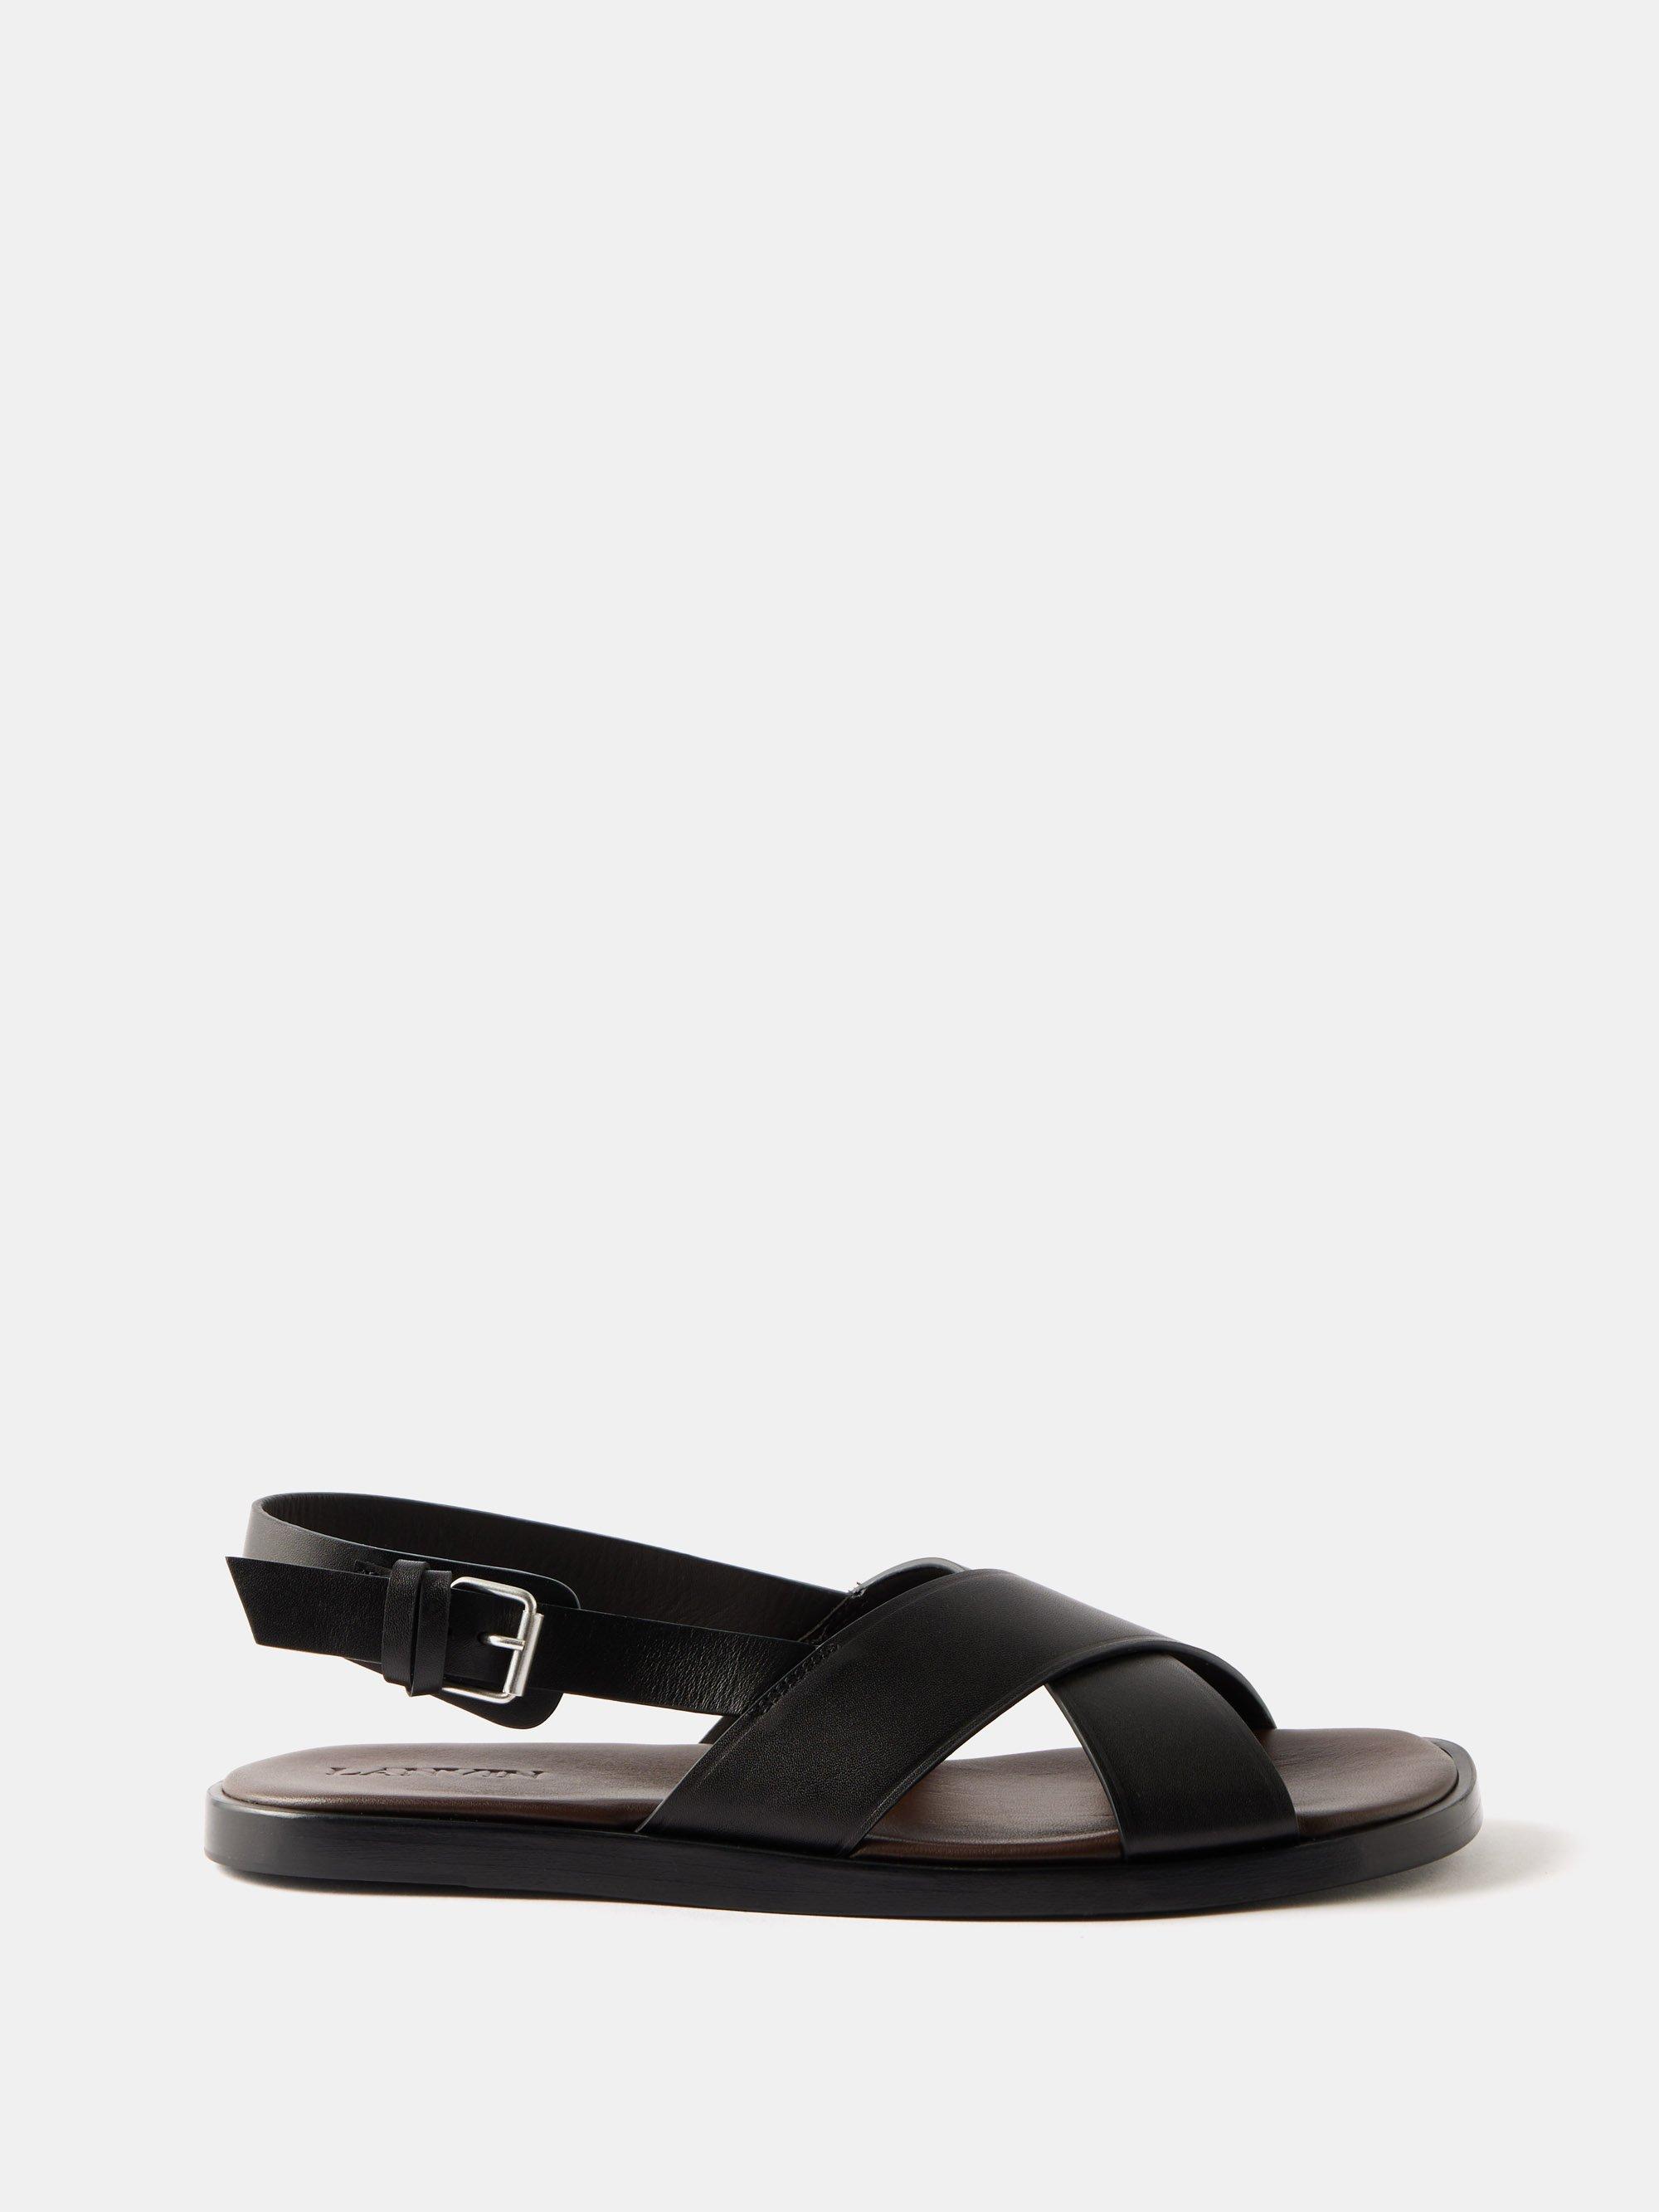 Paaduks Calor Brown Flat Sandals For Men | Sepia Stories-sgquangbinhtourist.com.vn